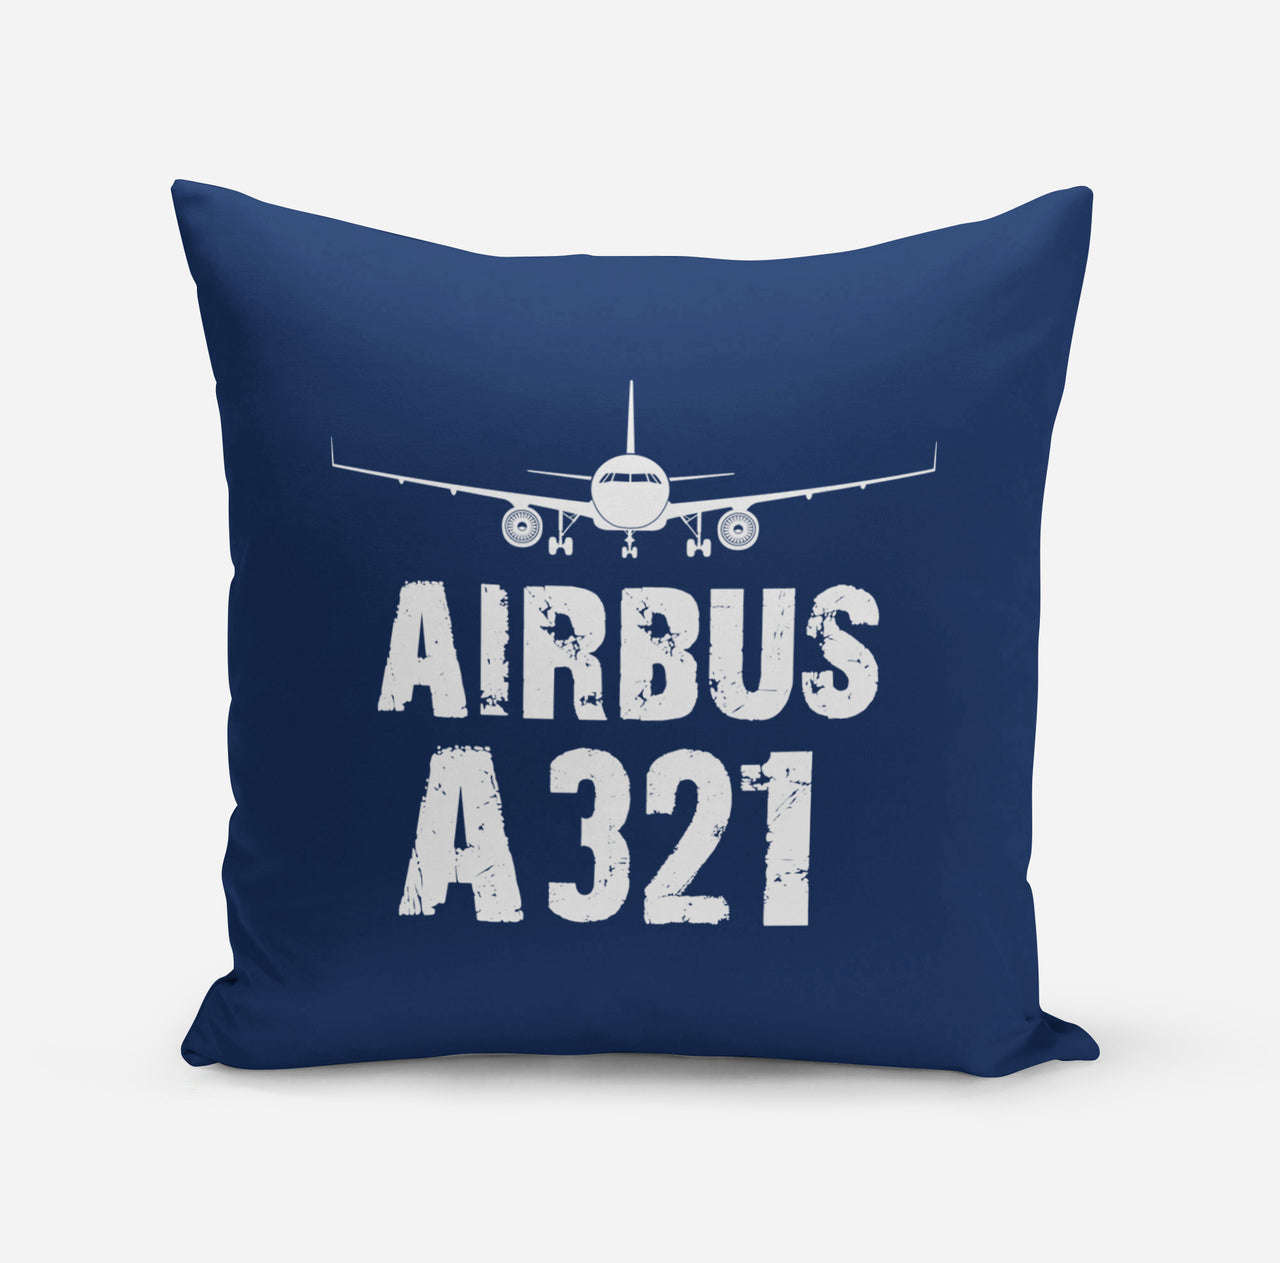 Airbus A321 & Plane Designed Pillows